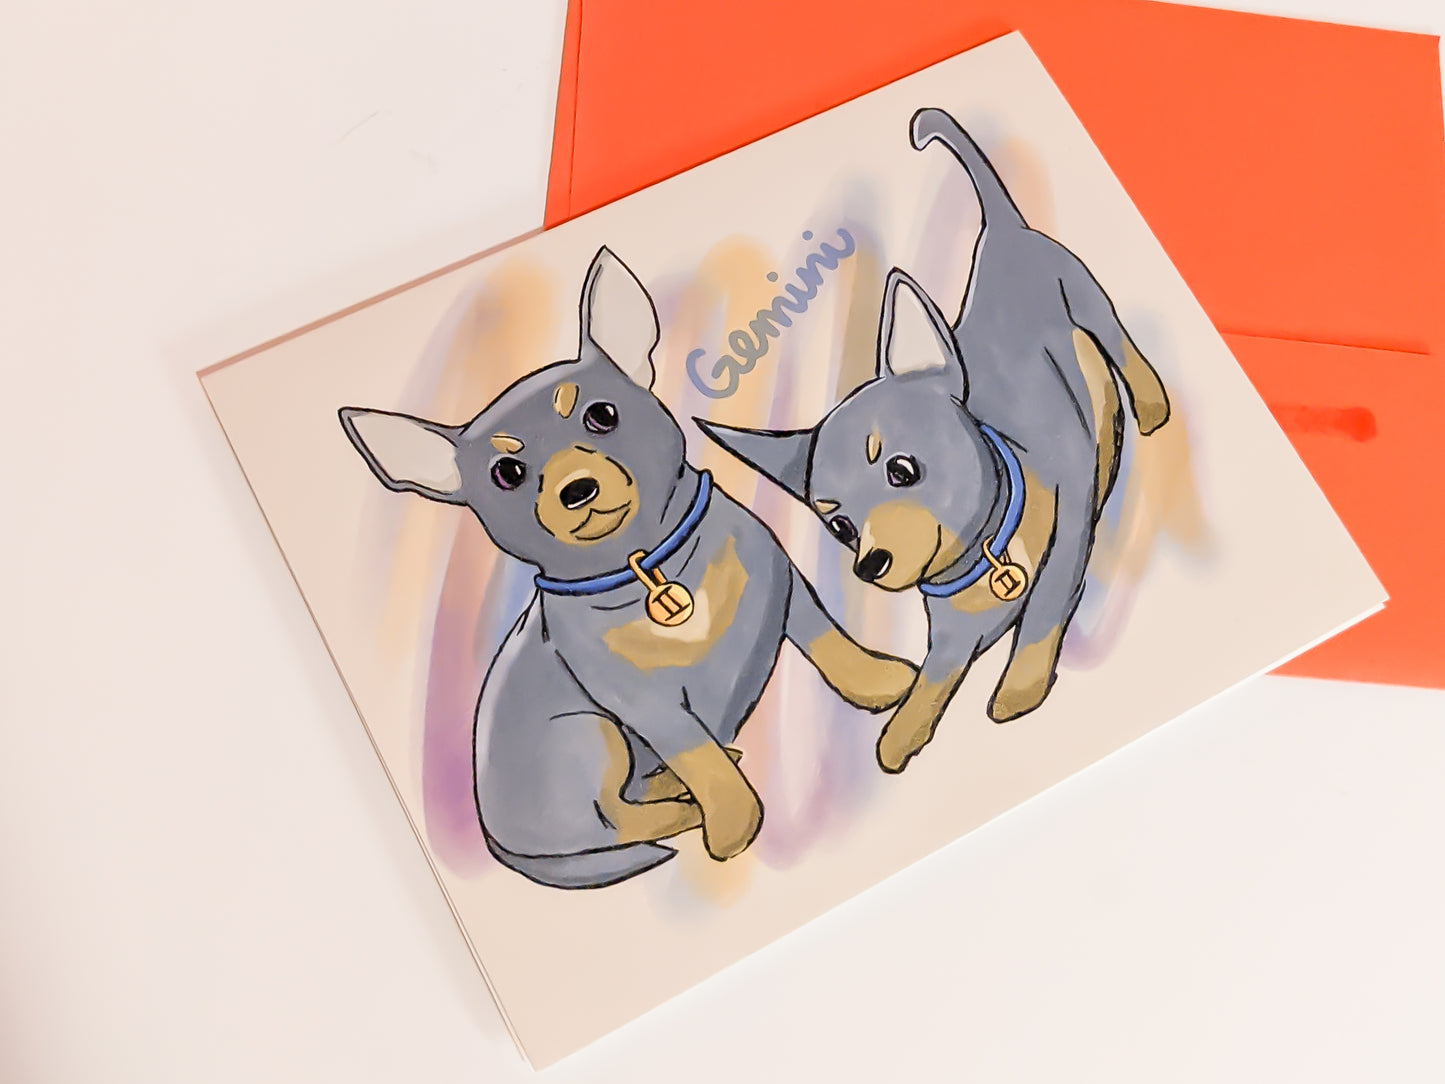 Gemini Dog Greeting Card